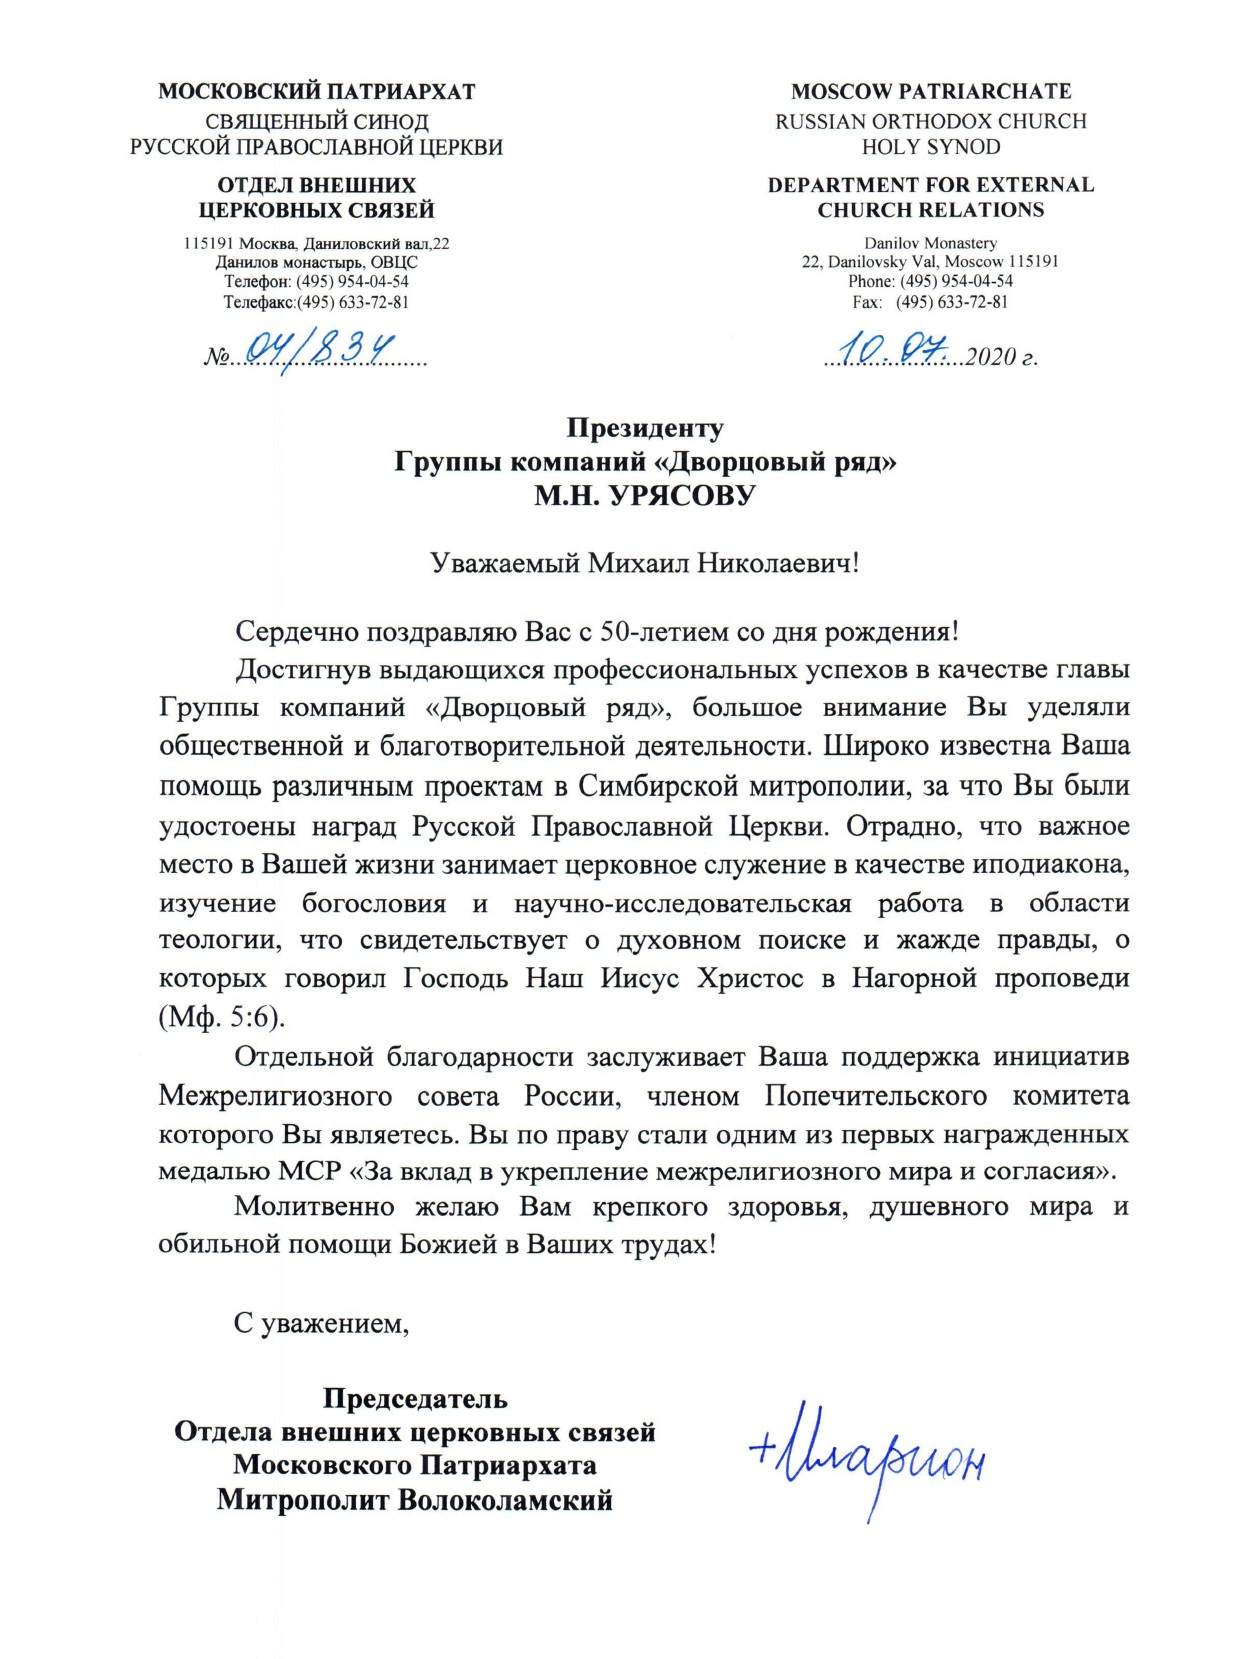 Митрополит Волоколамский Иларион поздравил Михаила Николаевича Урясова с юбилеем